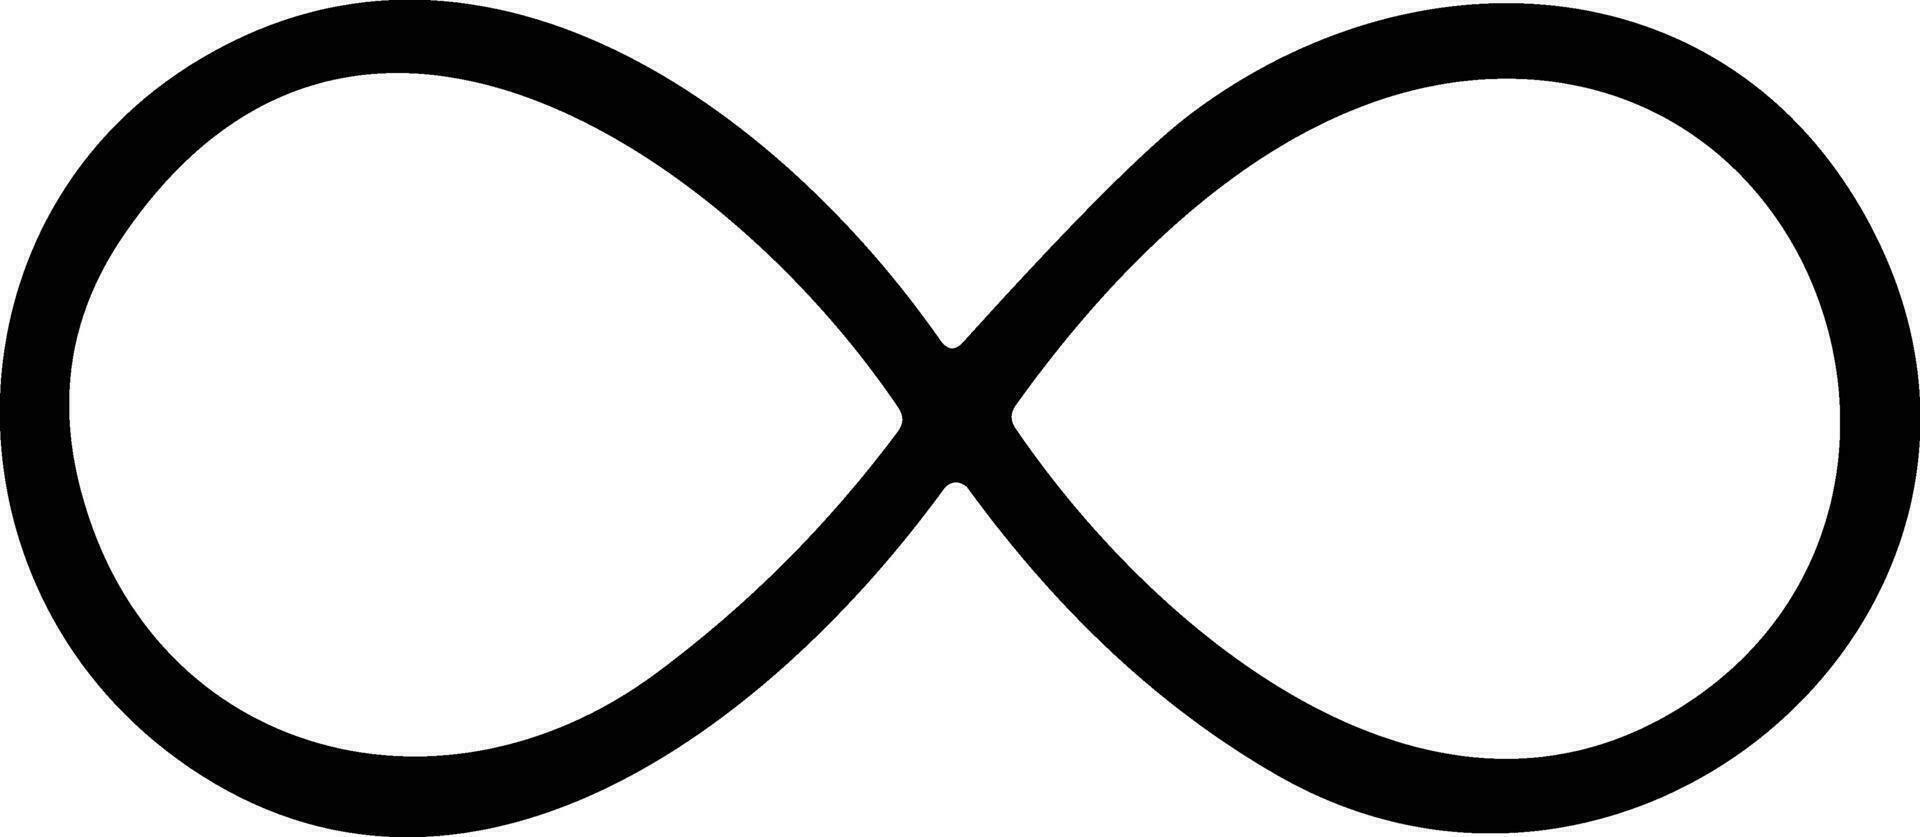 Infinity icon. Infinity, eternity, infinite, endless, loop symbols. Unlimited infinity icon flat style stock vector